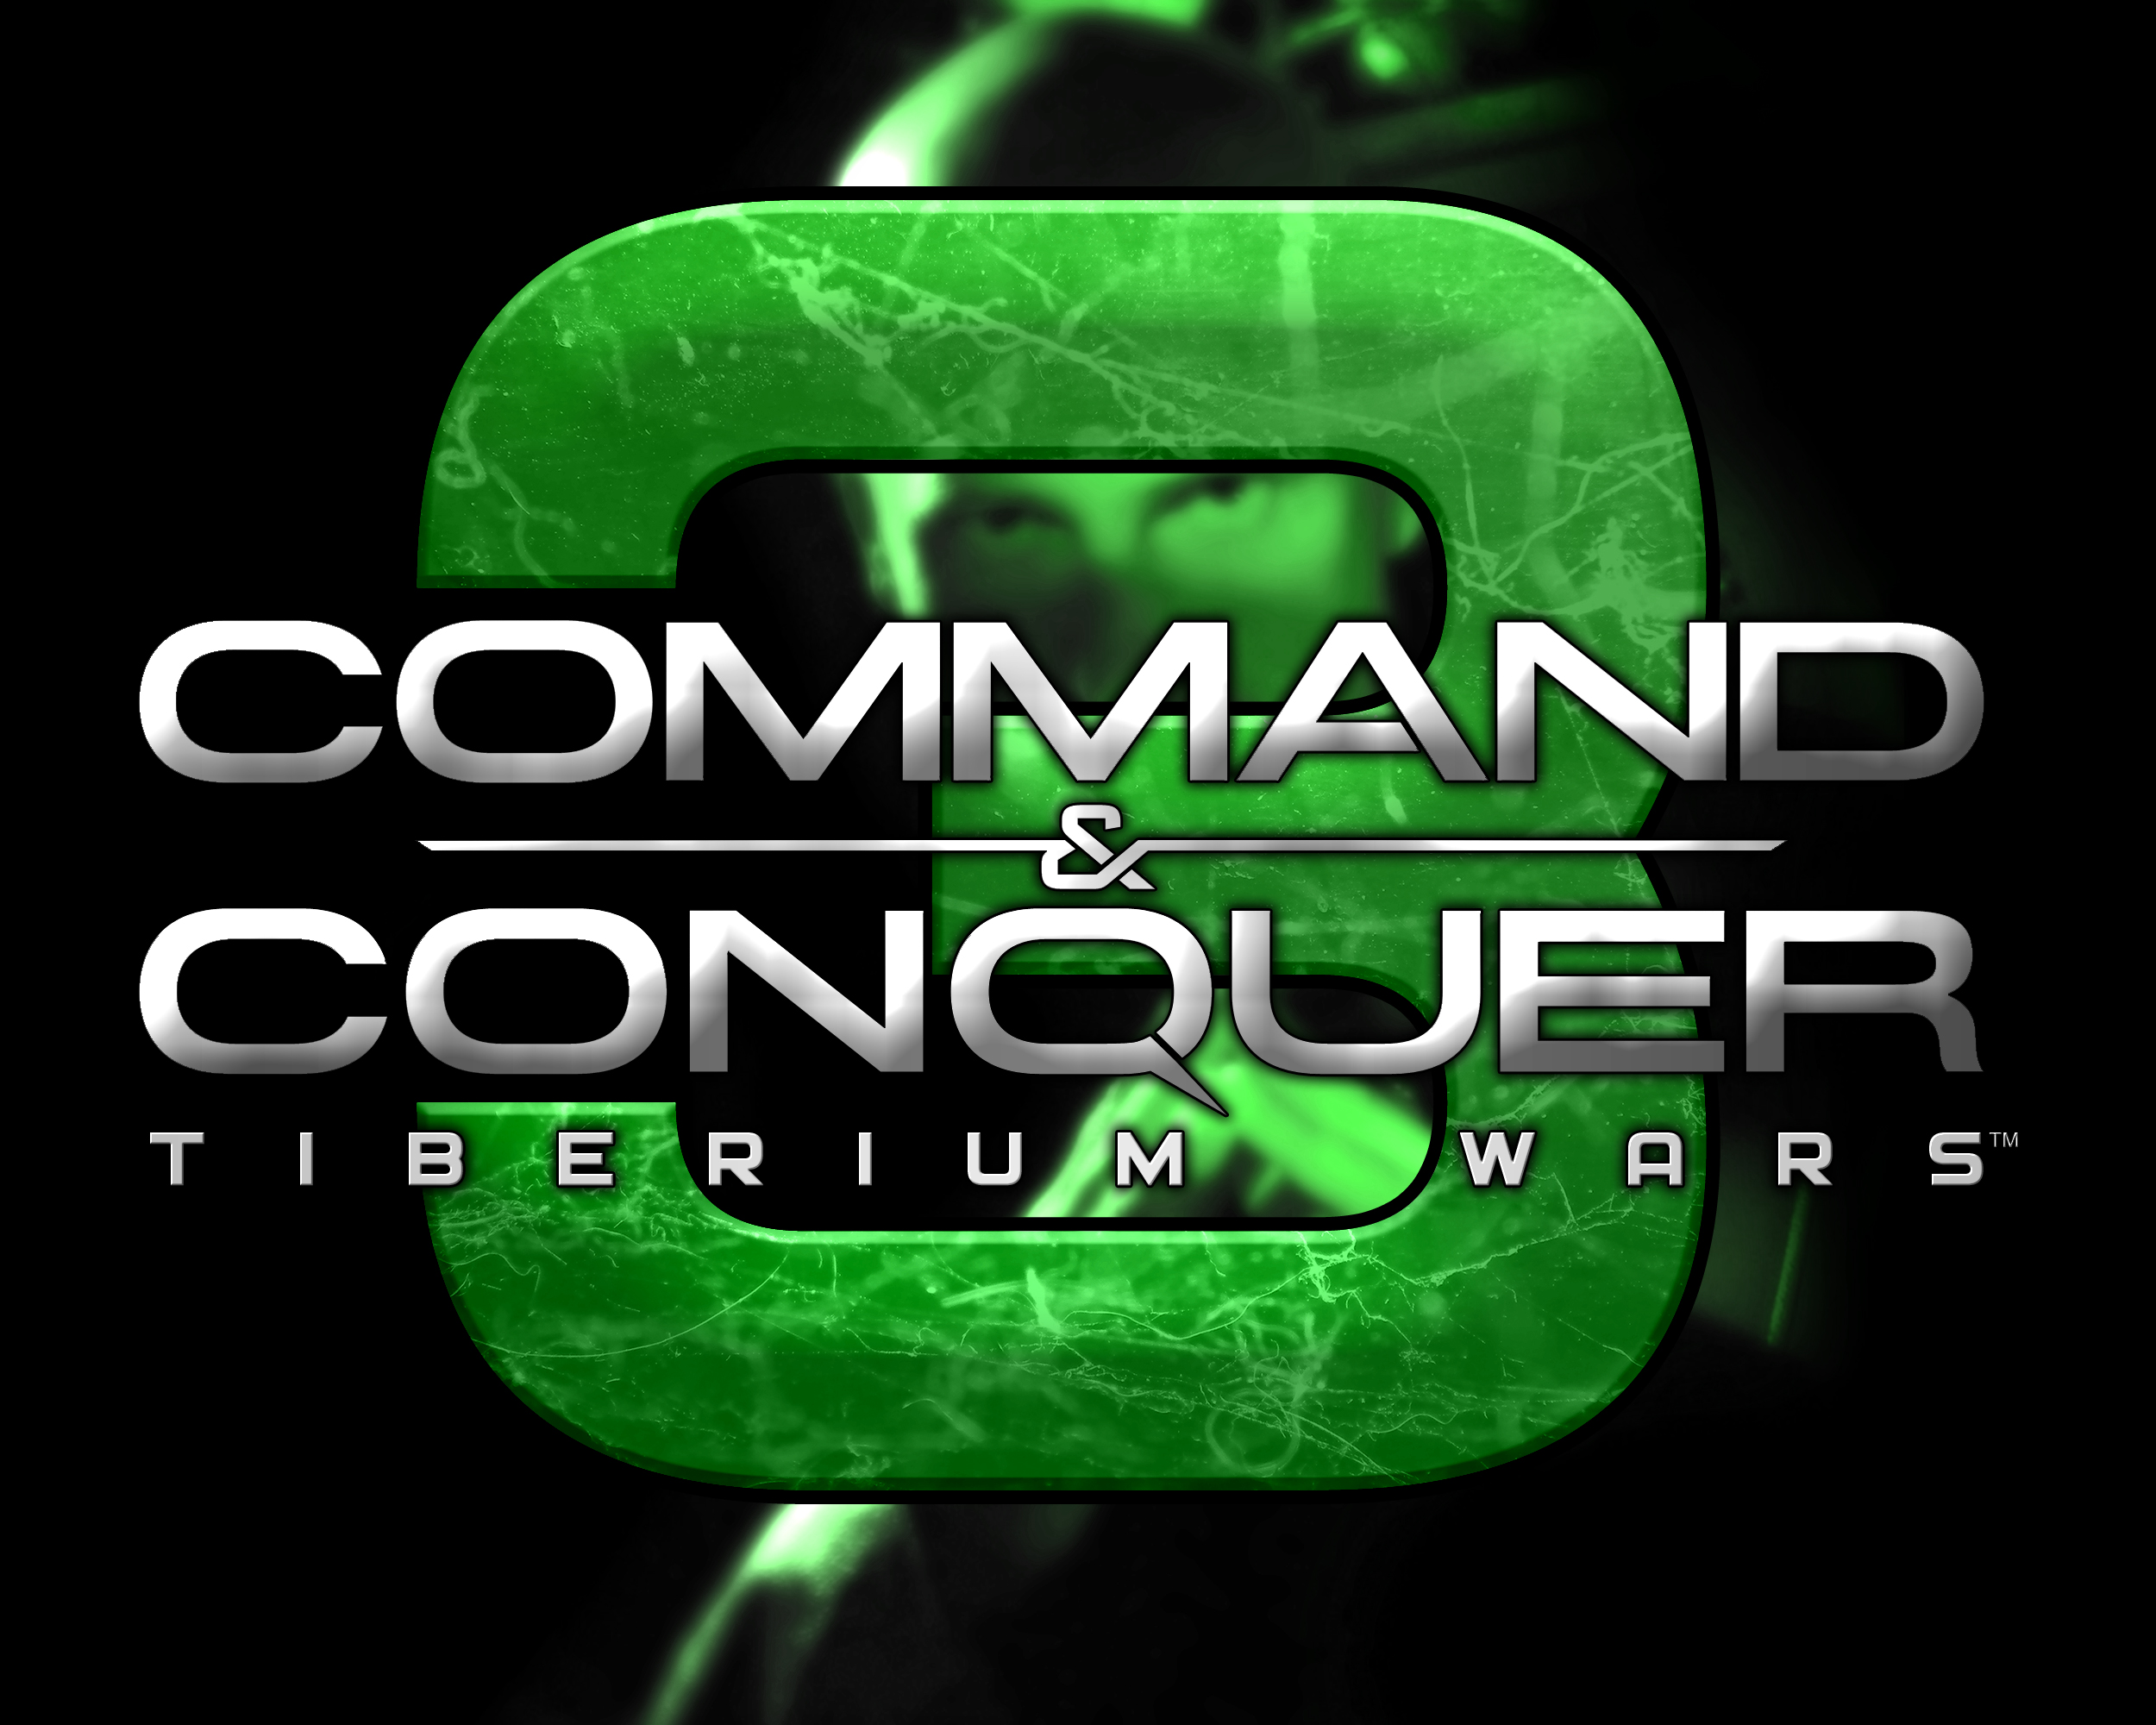 Command And Conquer 3 Tiberium Wars | НОД | Турнир побережье